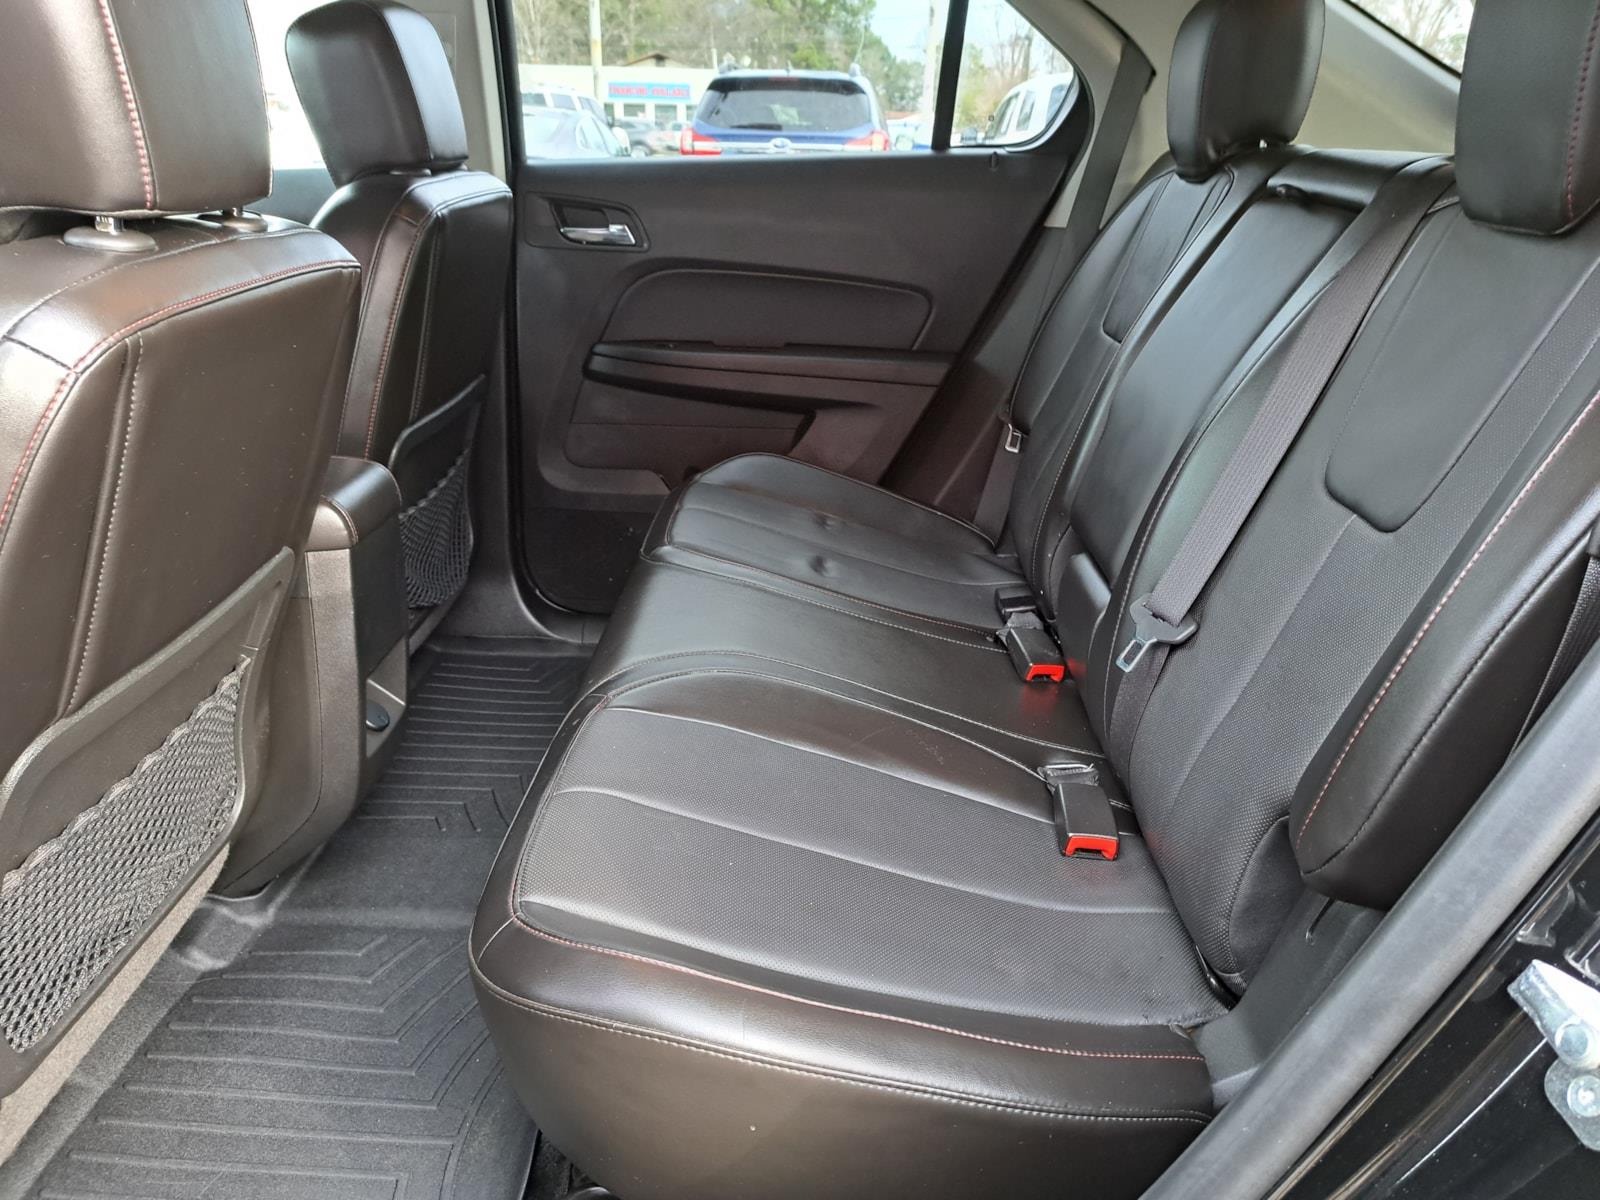 2015 Chevrolet Equinox LTZ SUV All Wheel Drive thumbnail 52